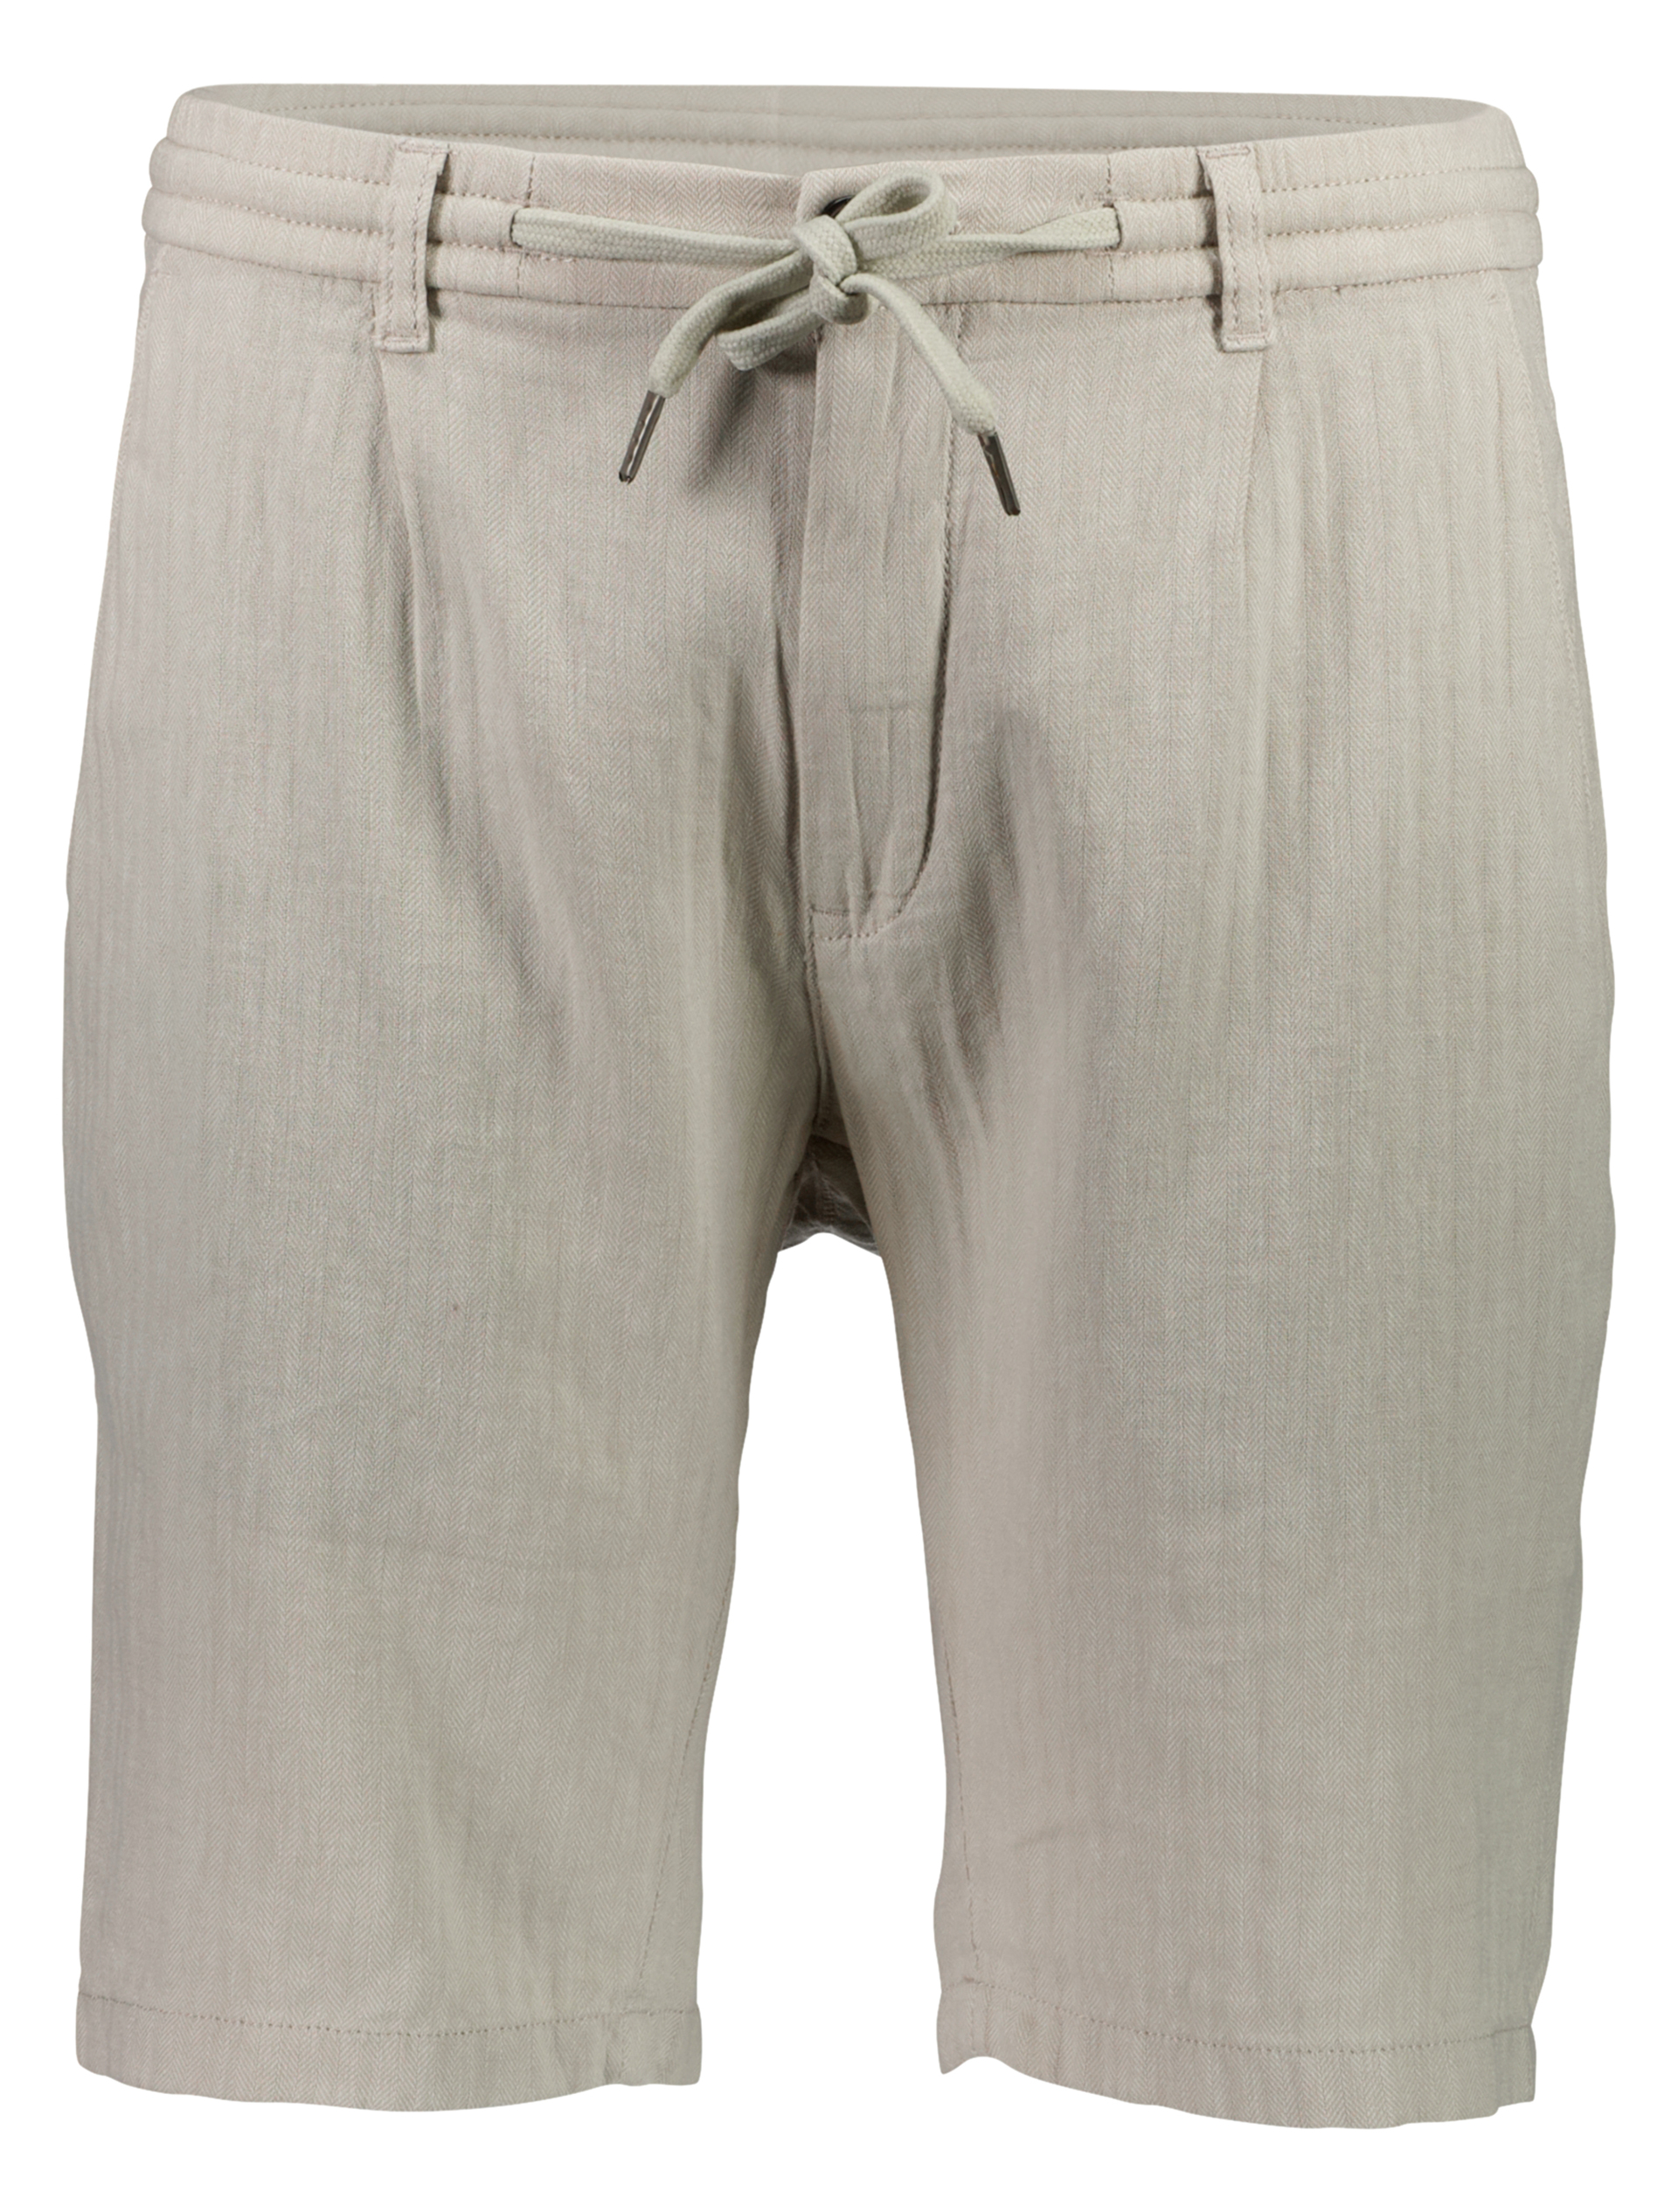 Junk de Luxe Linen shorts grey / lt stone